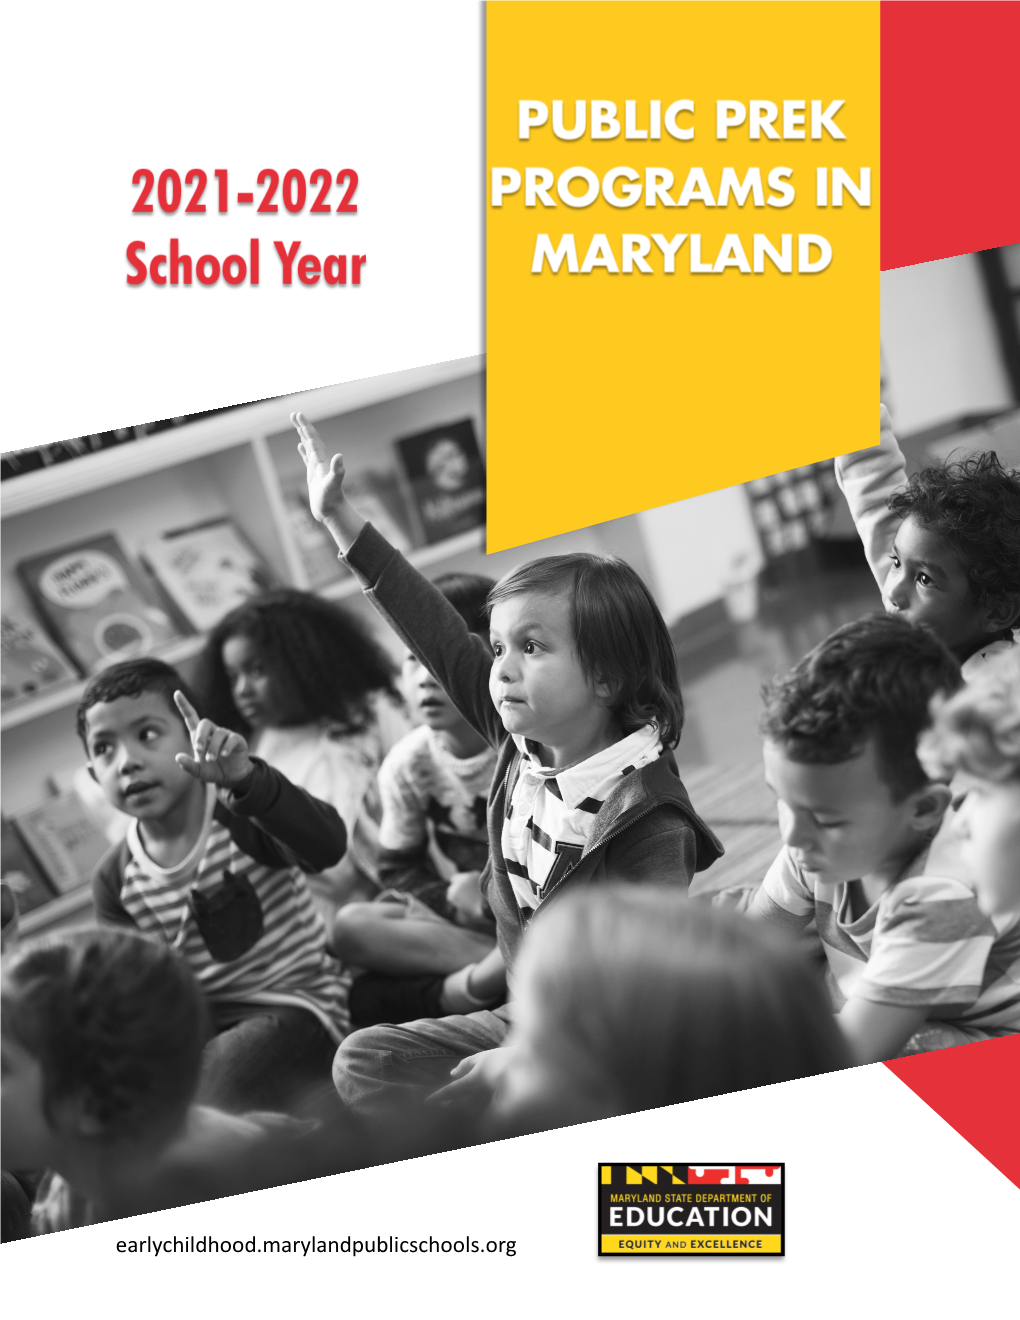 2021-2022 Public Prek Programs in Maryland